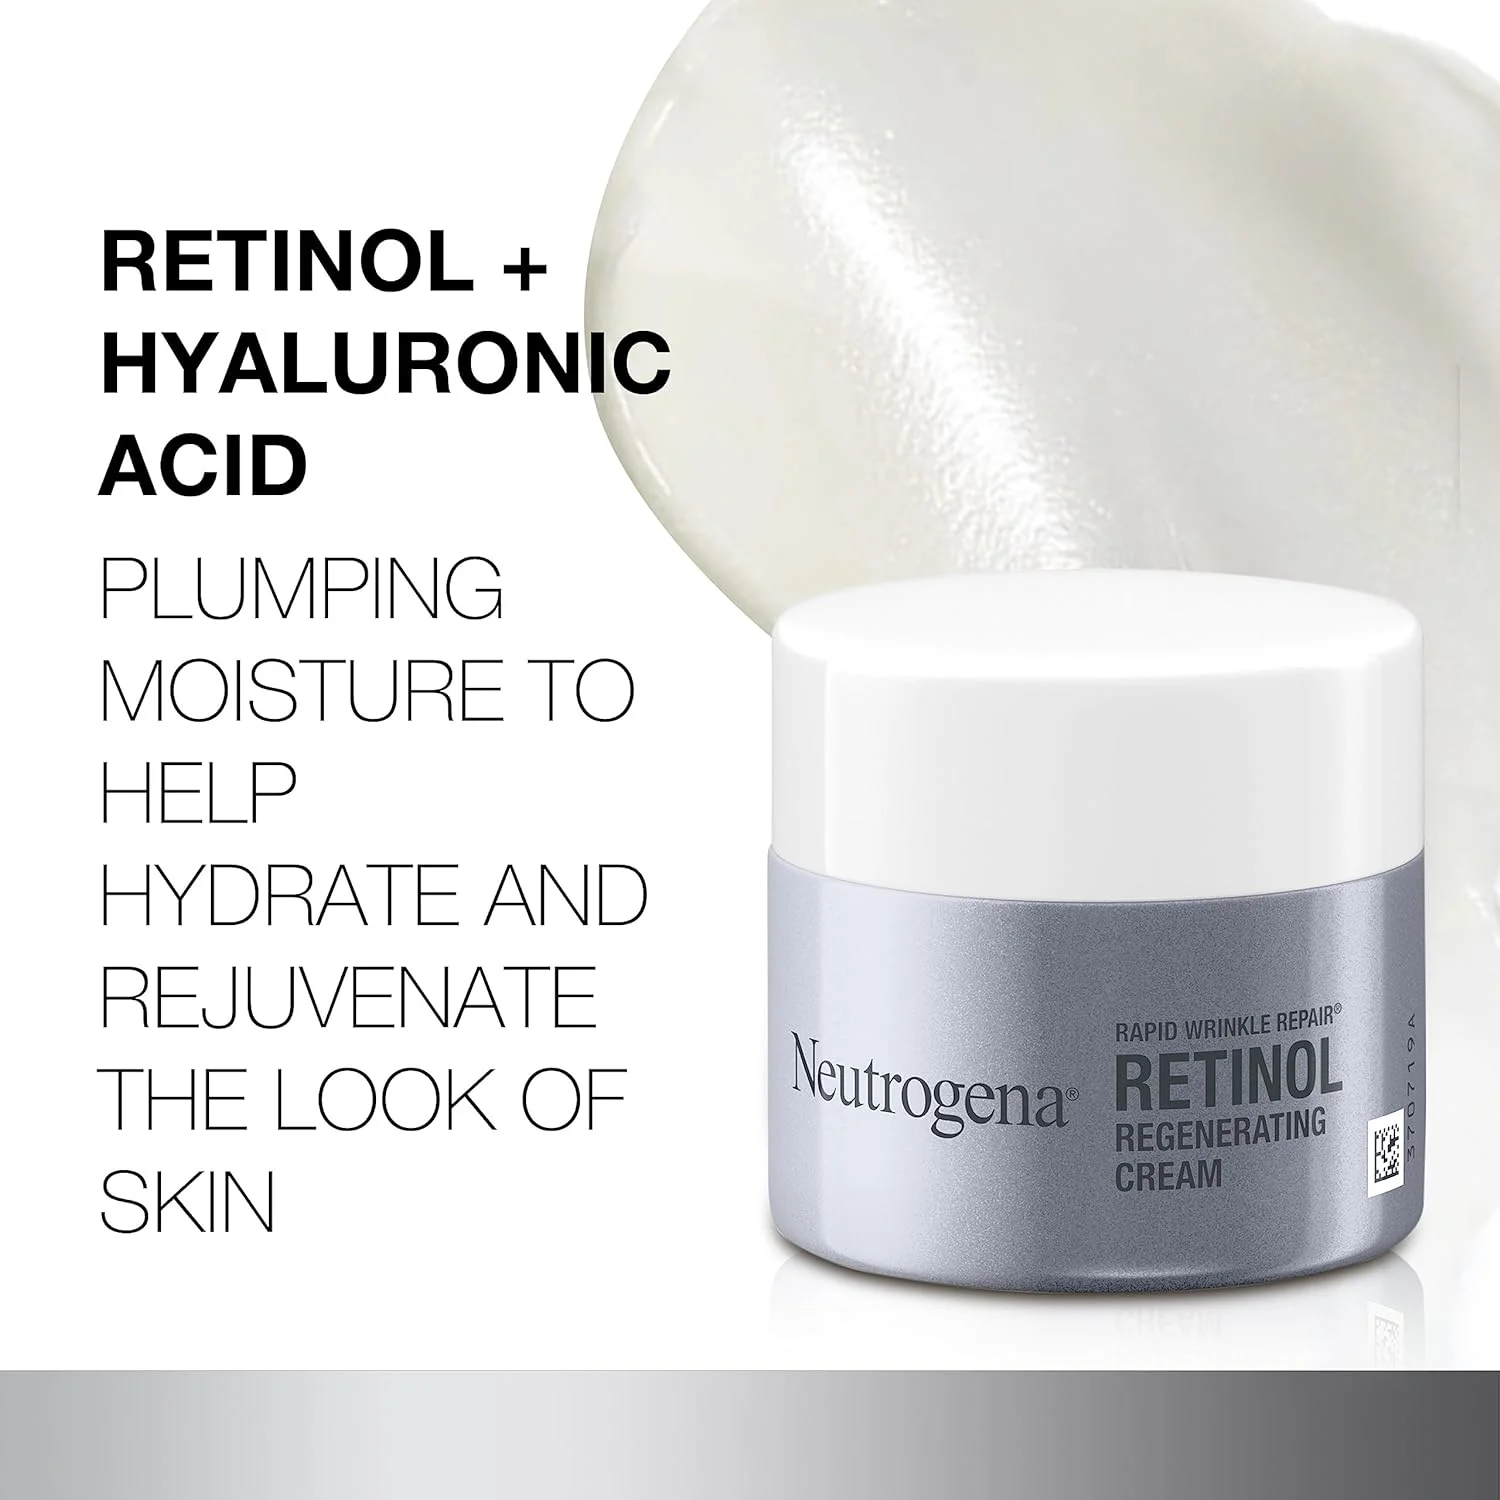 
Neutrogena Rapid Wrinkle Repair Retinol Face Moisturizer, Daily Anti-Aging Face Cream with Retinol & Hyaluronic Acid to Fight Fine Lines, Wrinkles